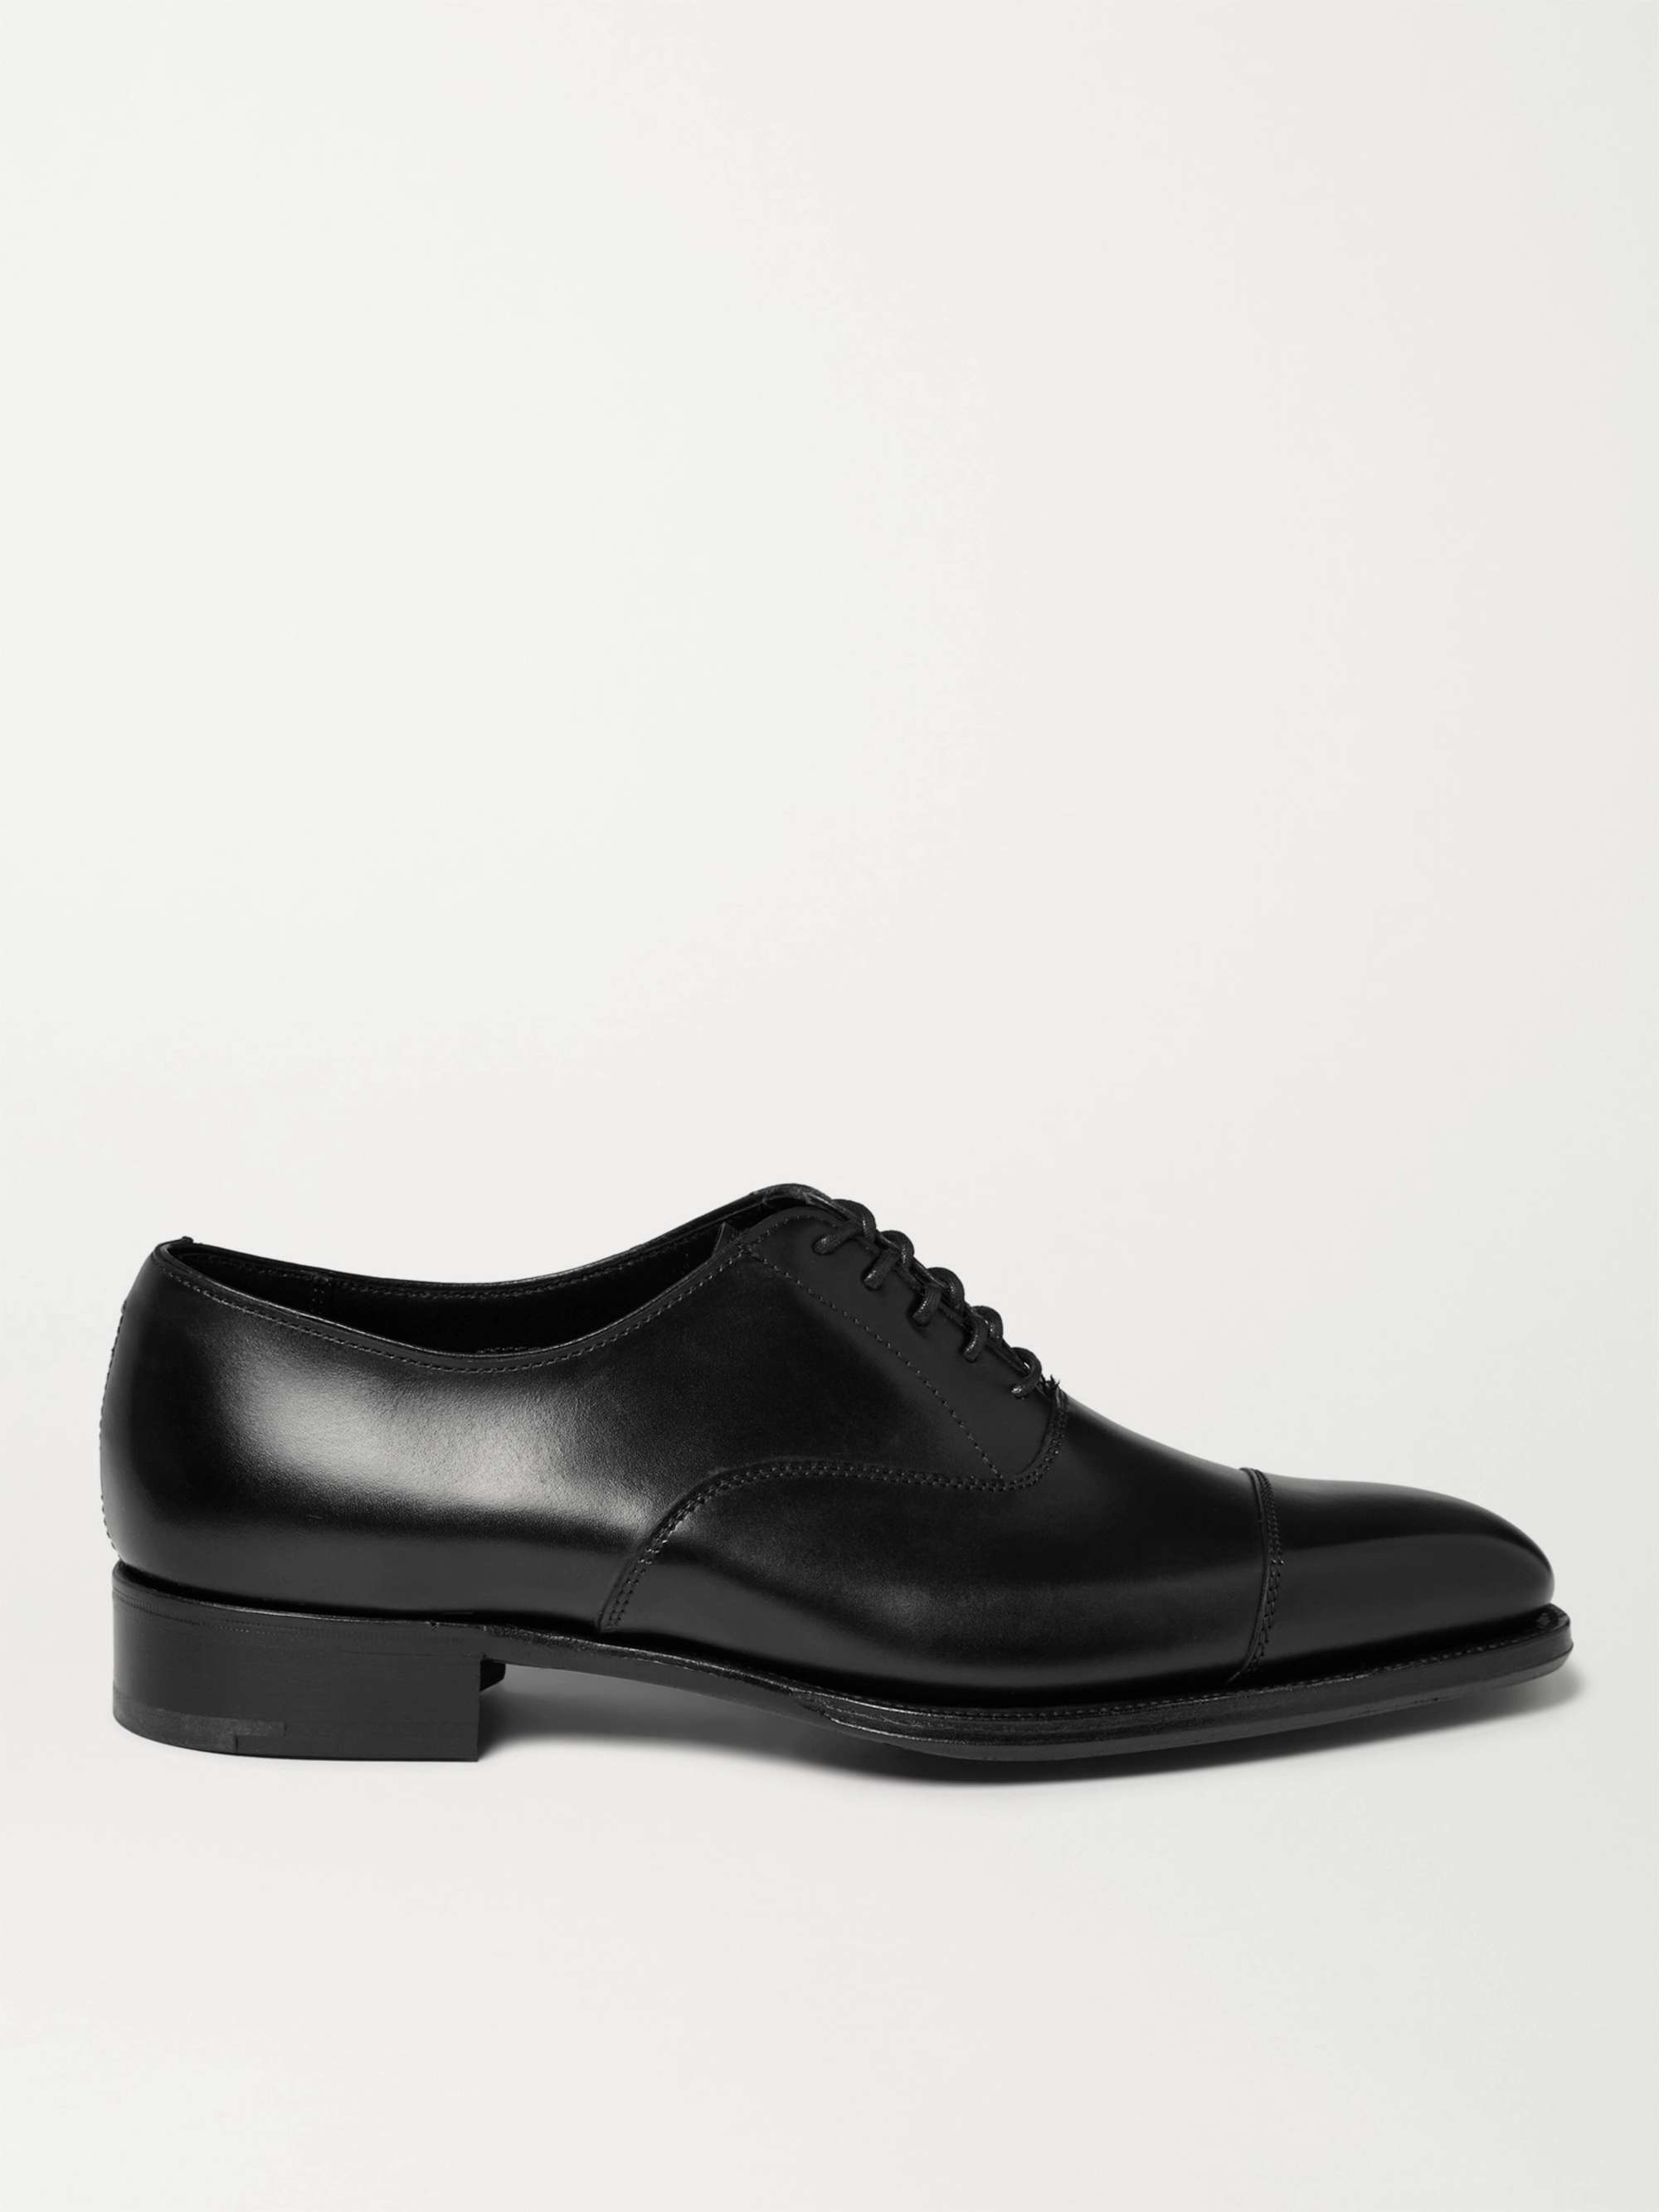 KINGSMAN + George Cleverley Leather Oxford Shoes for Men | MR PORTER